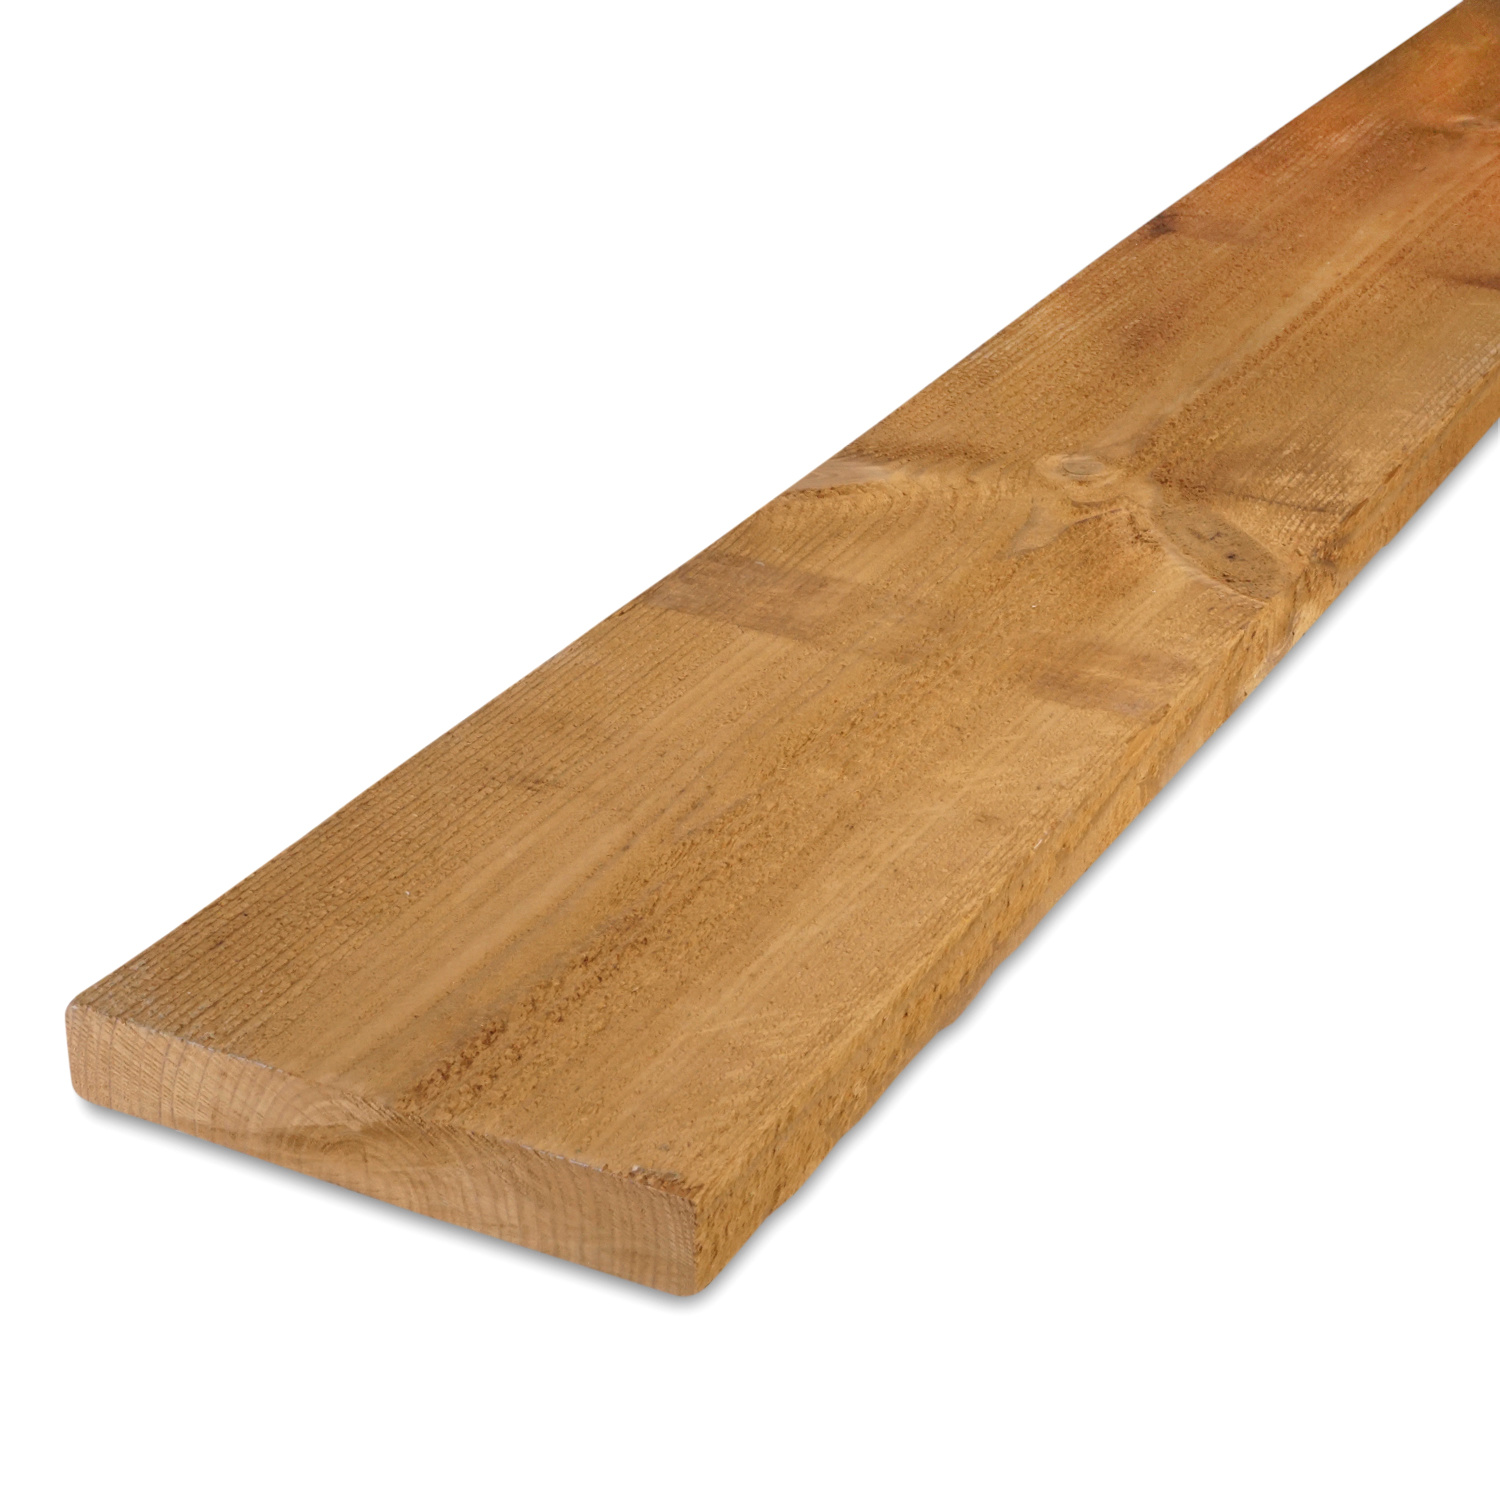 Ongepast Afdeling zwart Thermowood grenen plank 25x200mm - ruw thermo grenen kd (8-12%) | HOUTvakman